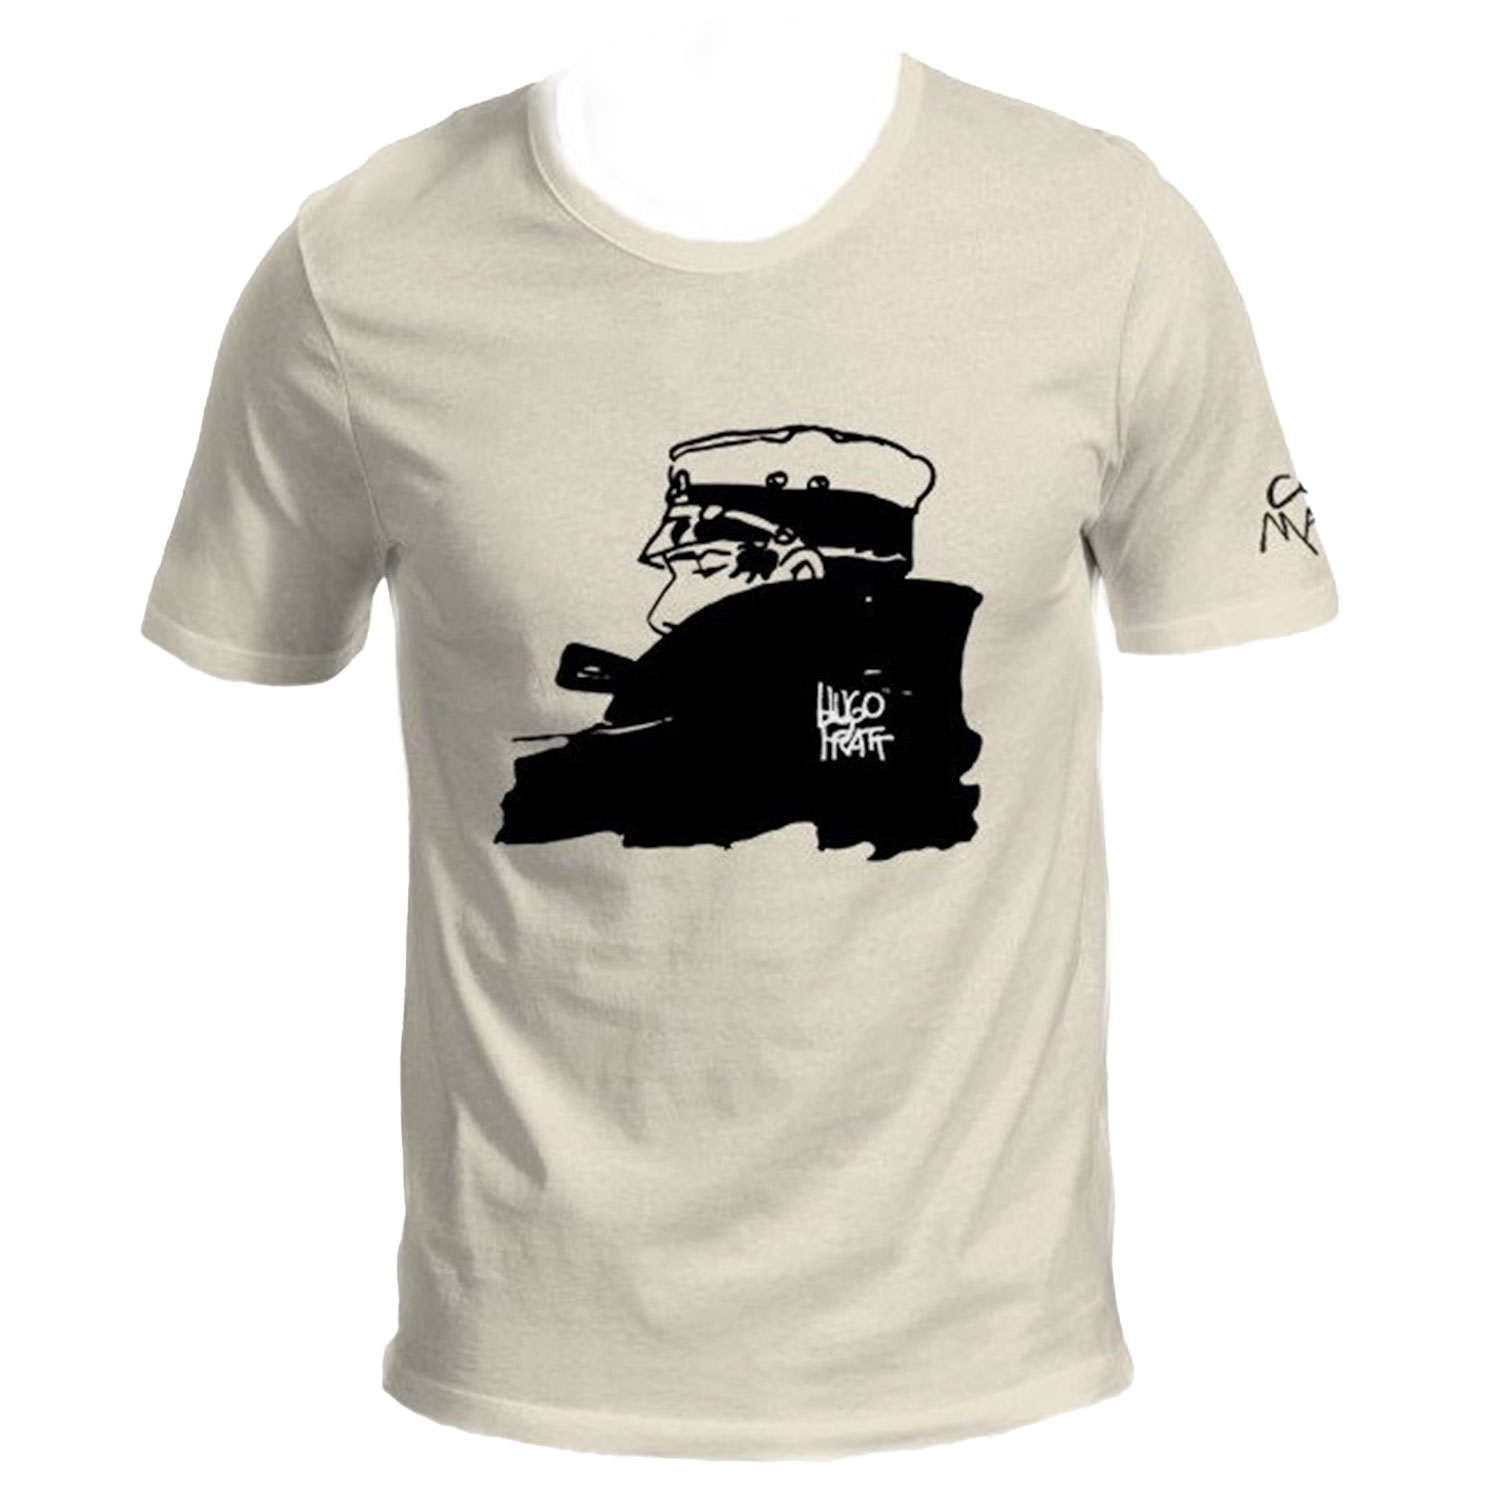 Hugo Pratt T-shirt : Corto Maltese , Nocturnal - Ecru - Size M